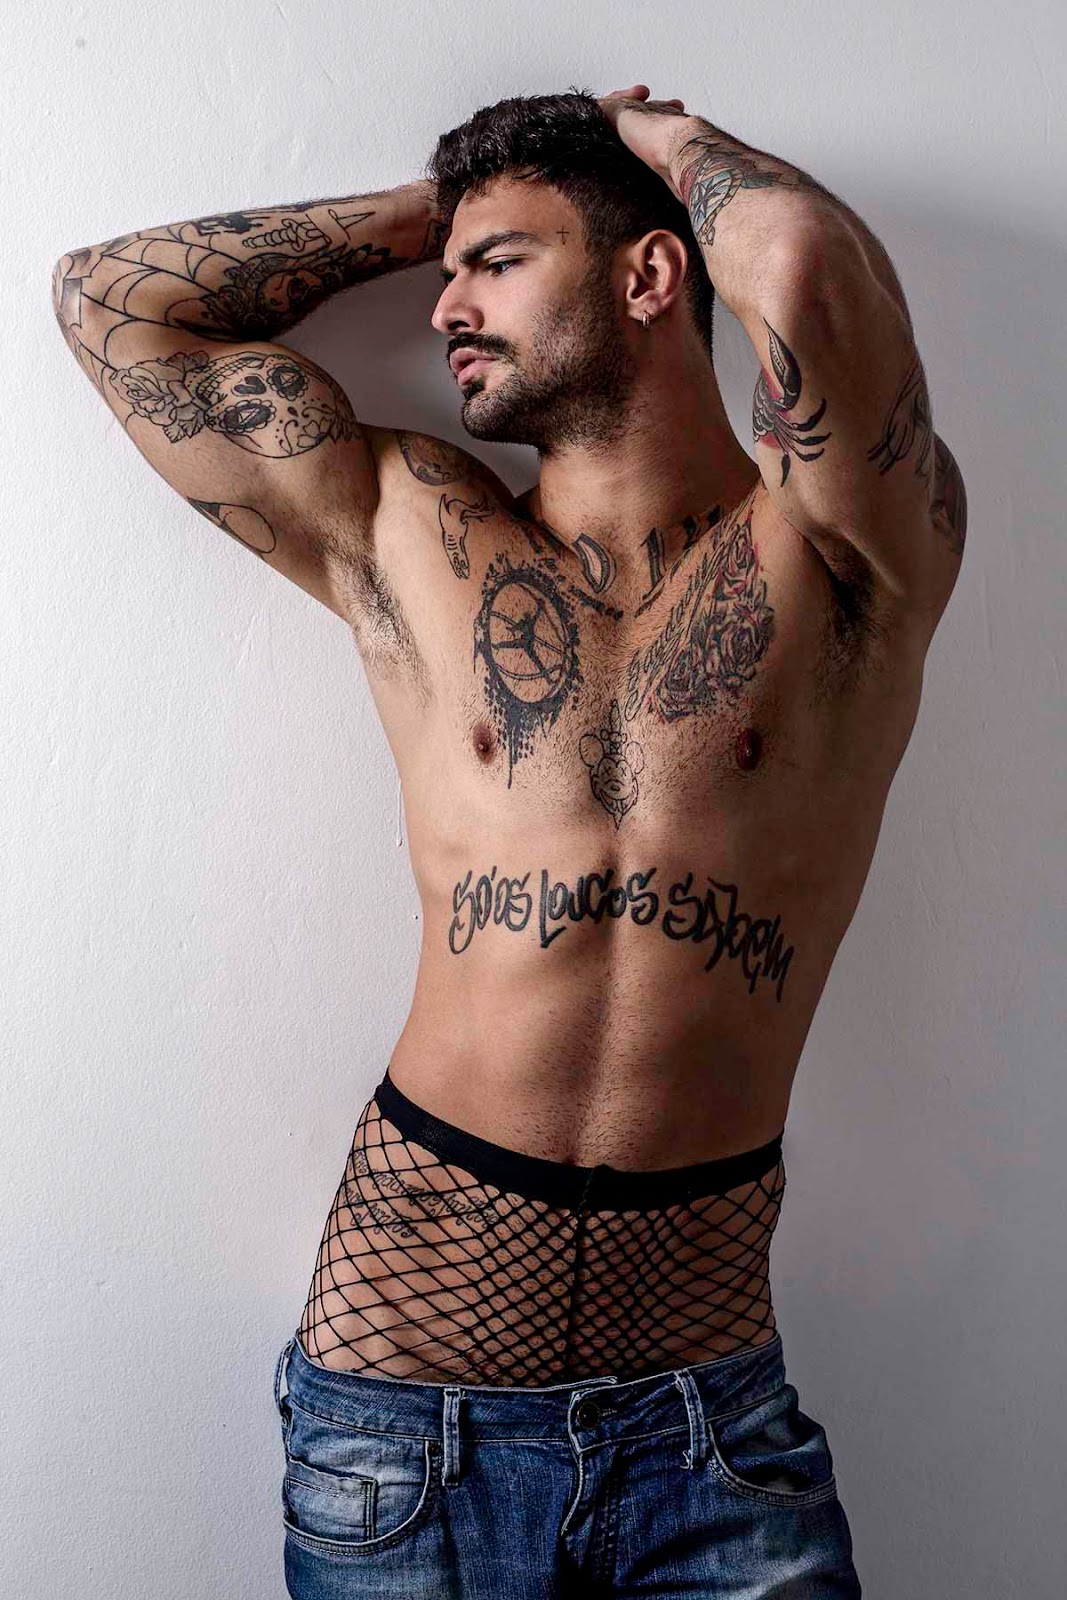 Luis coppini by ronaldo gutierrez for brazilian male model.